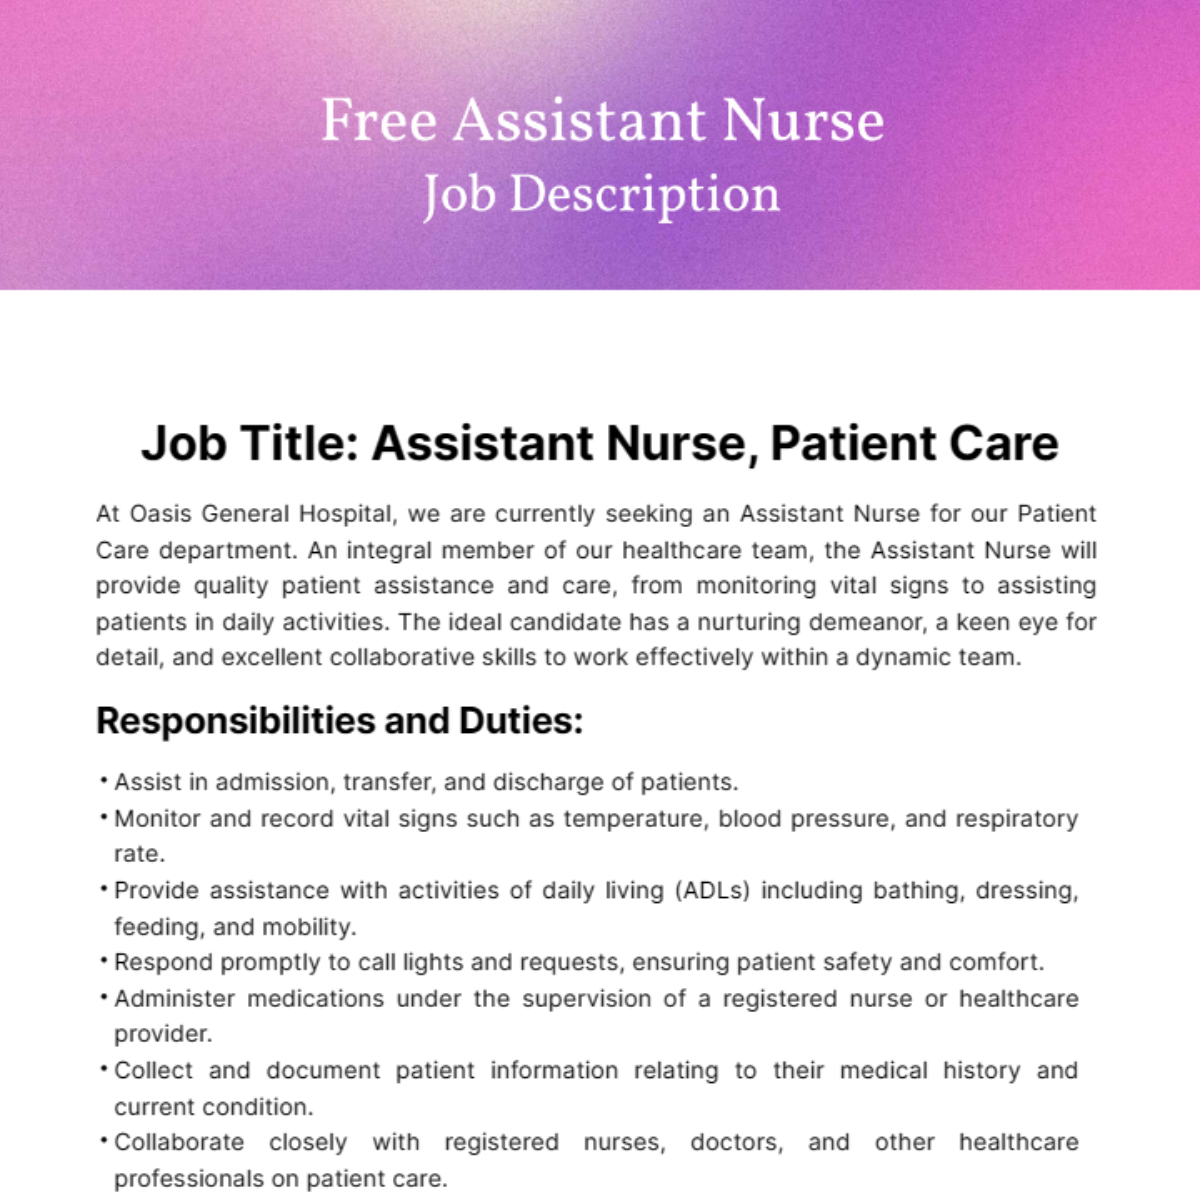 Free Assistant Nurse Job Description Template